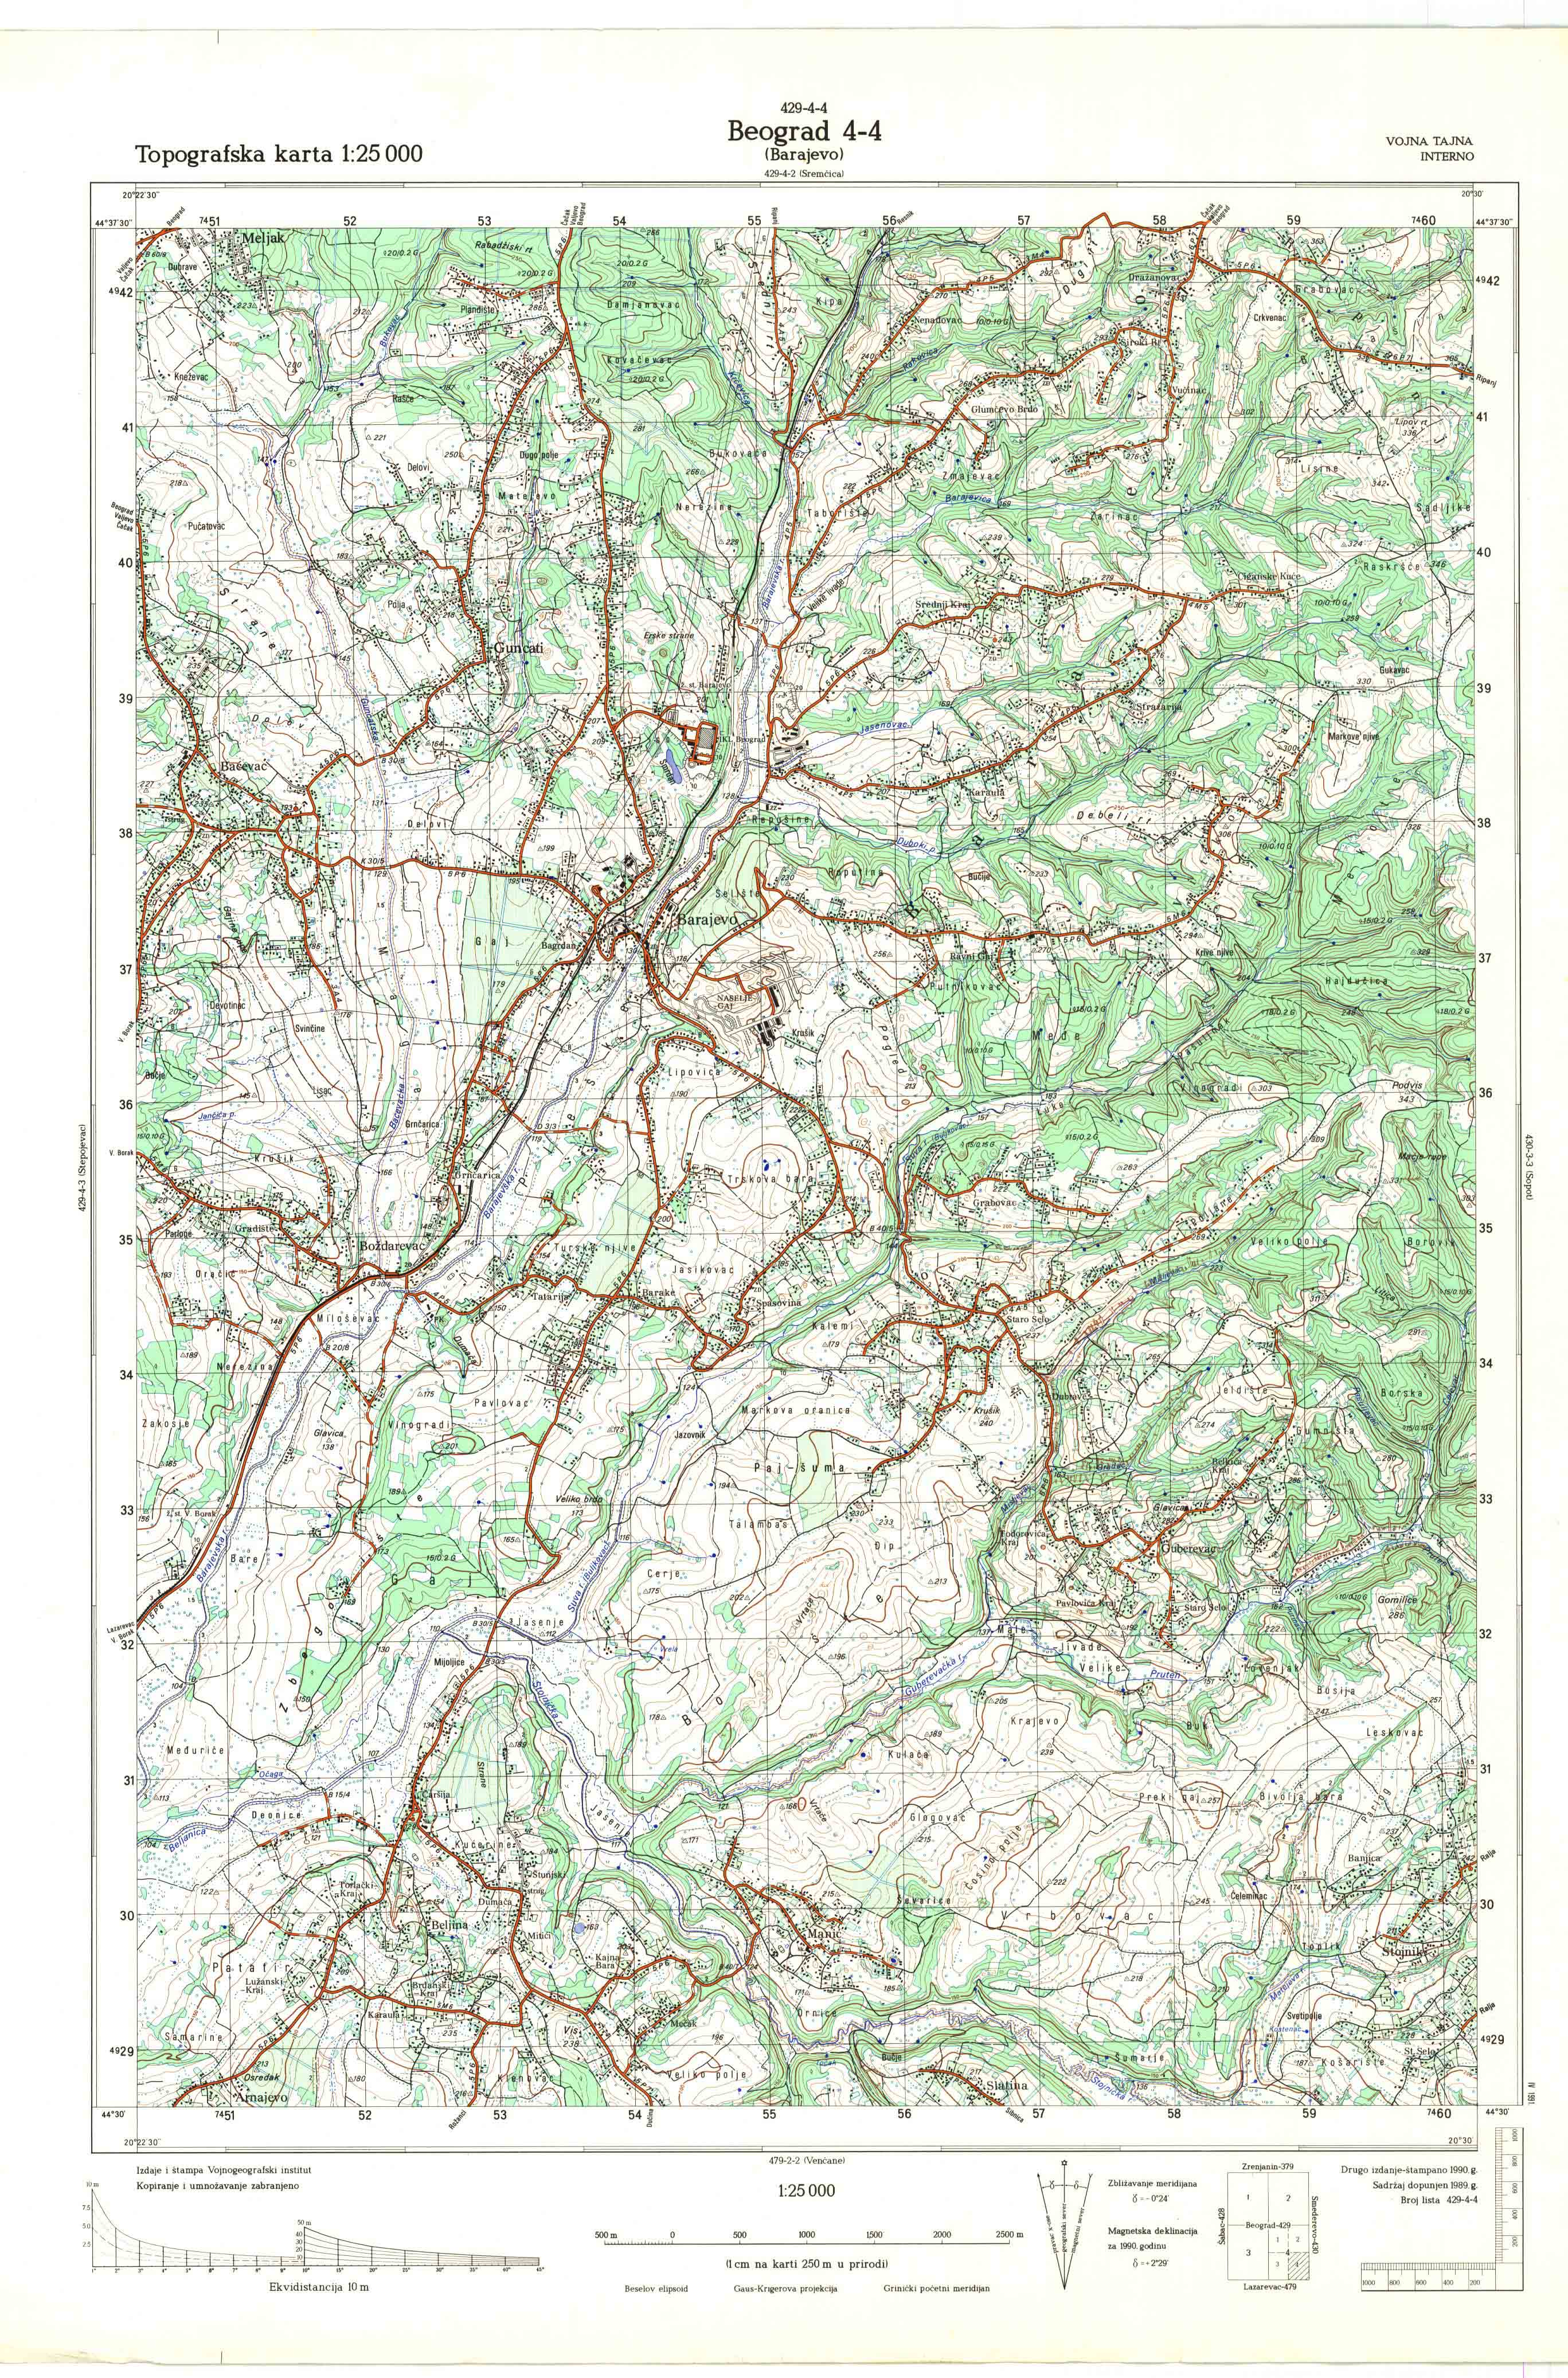  topografska karta srbije 25000 JNA  Beograd